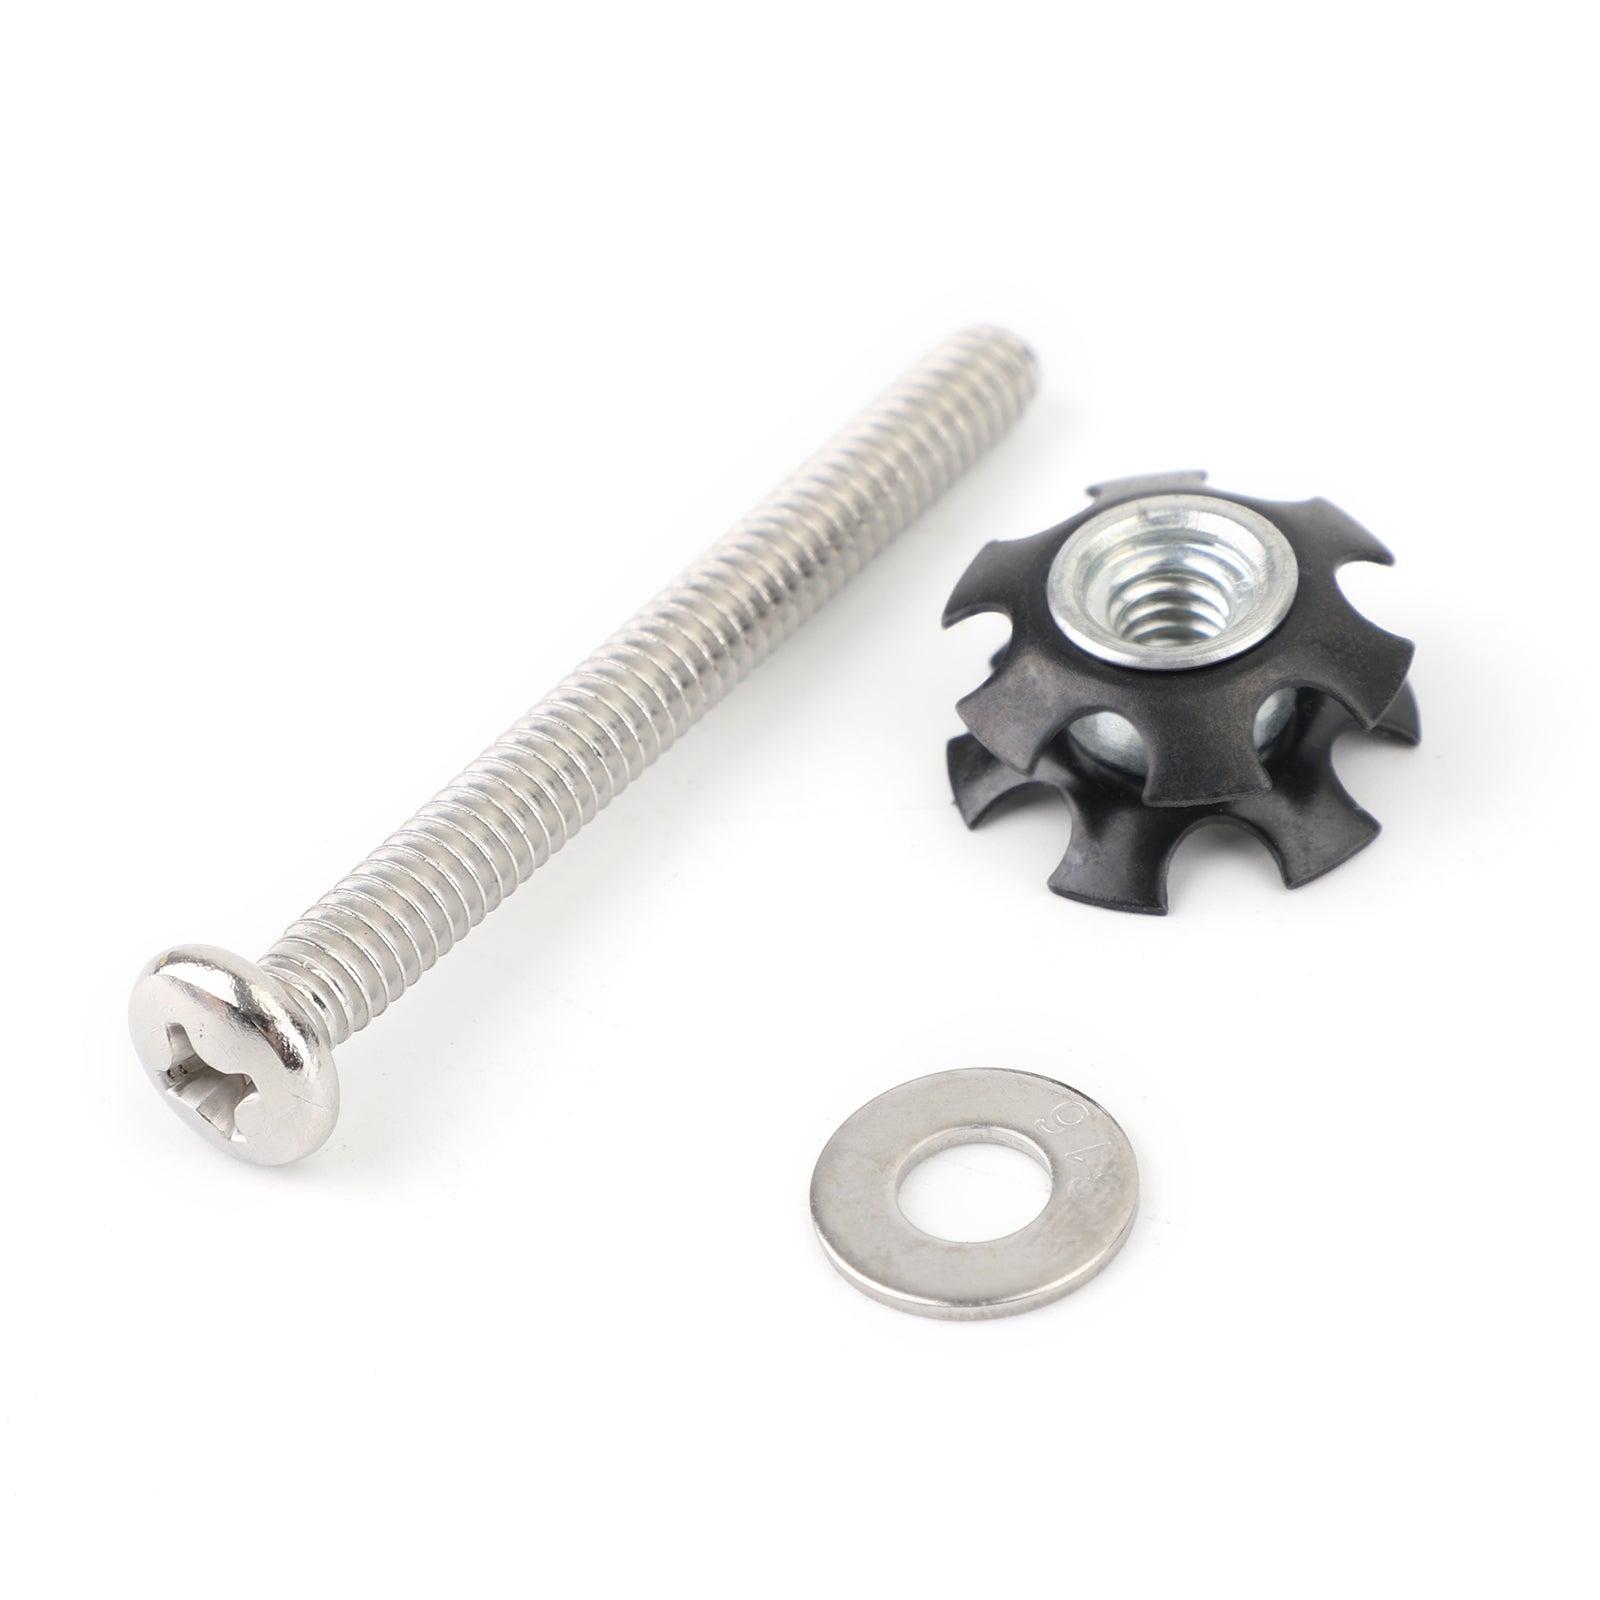 6Pcs Repair Kit Star nuts 1/4-20 screws For 1" OD tube Threadless Forks